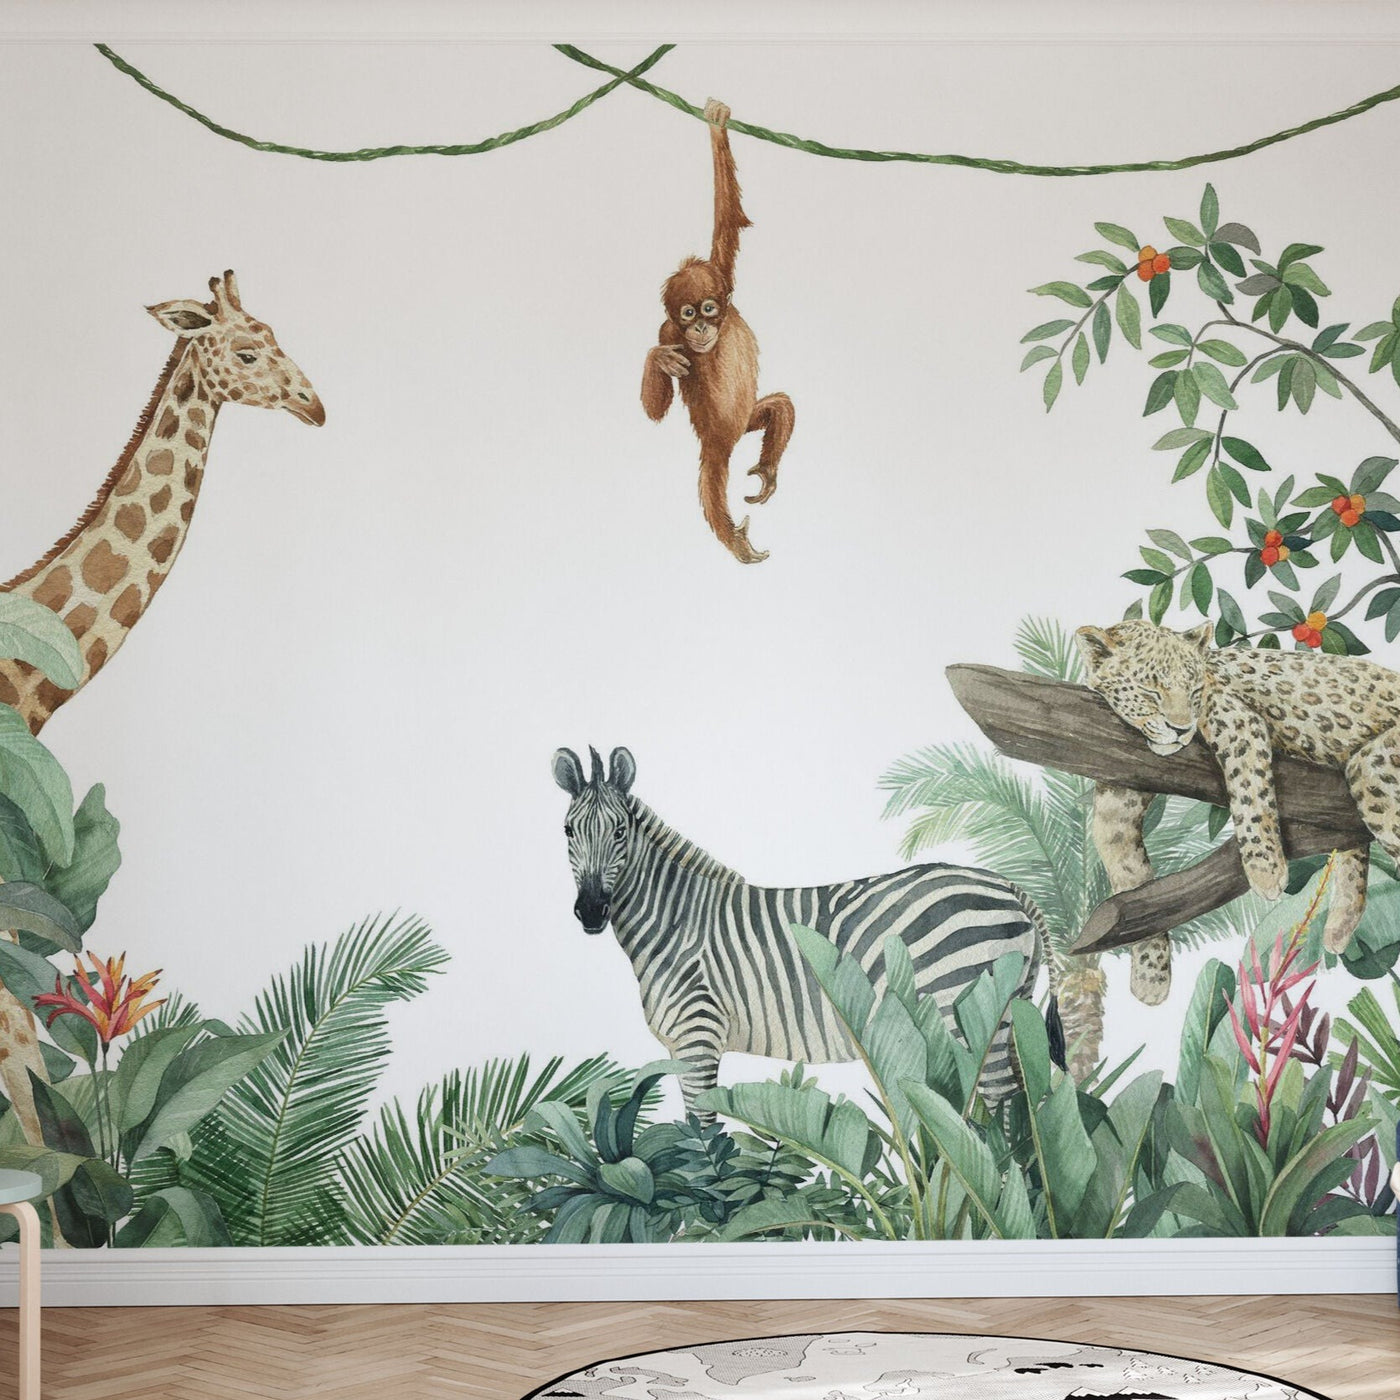 Kids Custom Wall Mural - Friends Of the Jungle